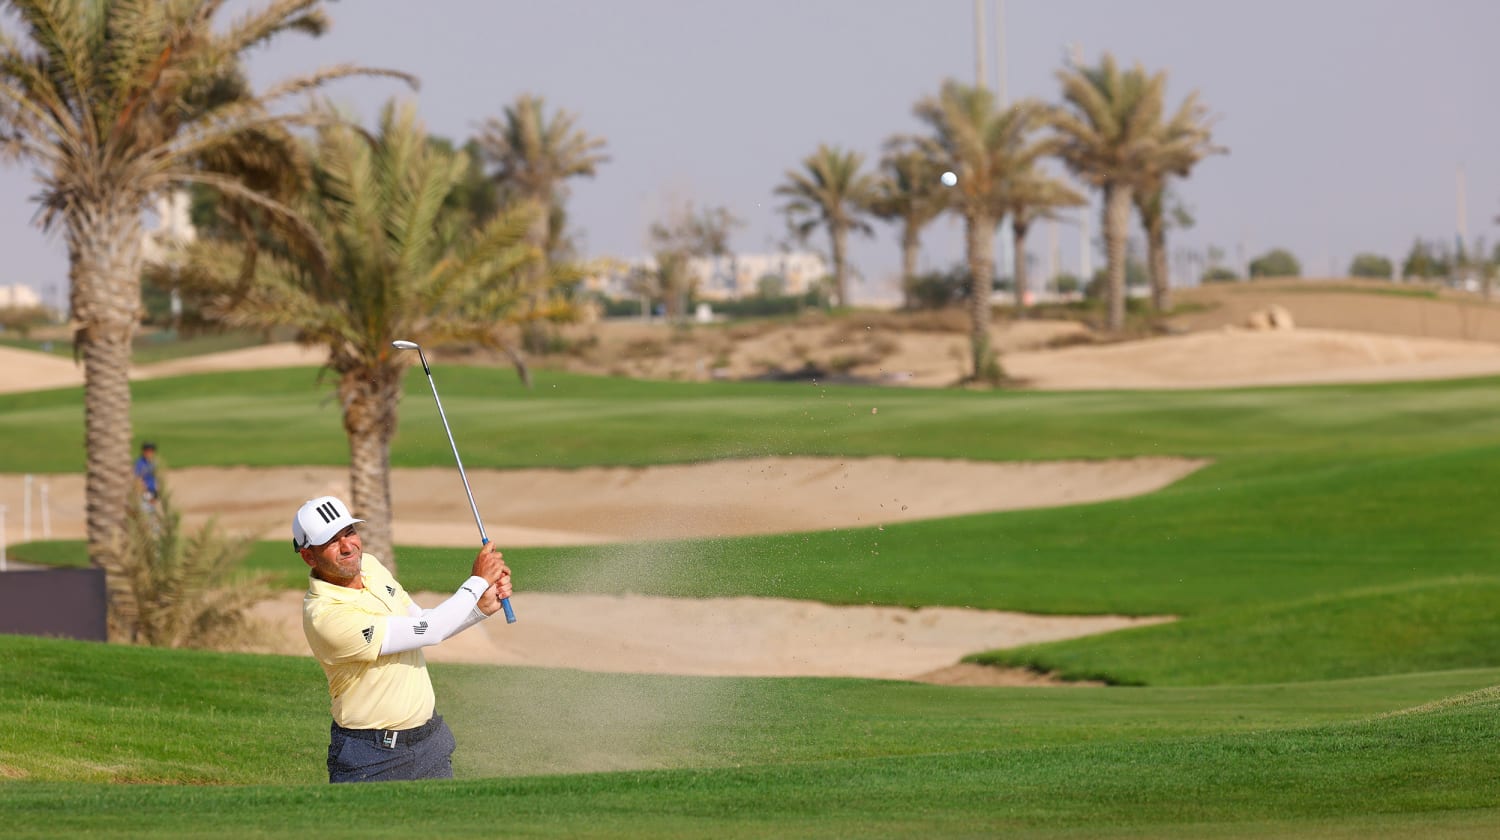 Saudi Arabias LIV Golf series is about more than just sportswashing